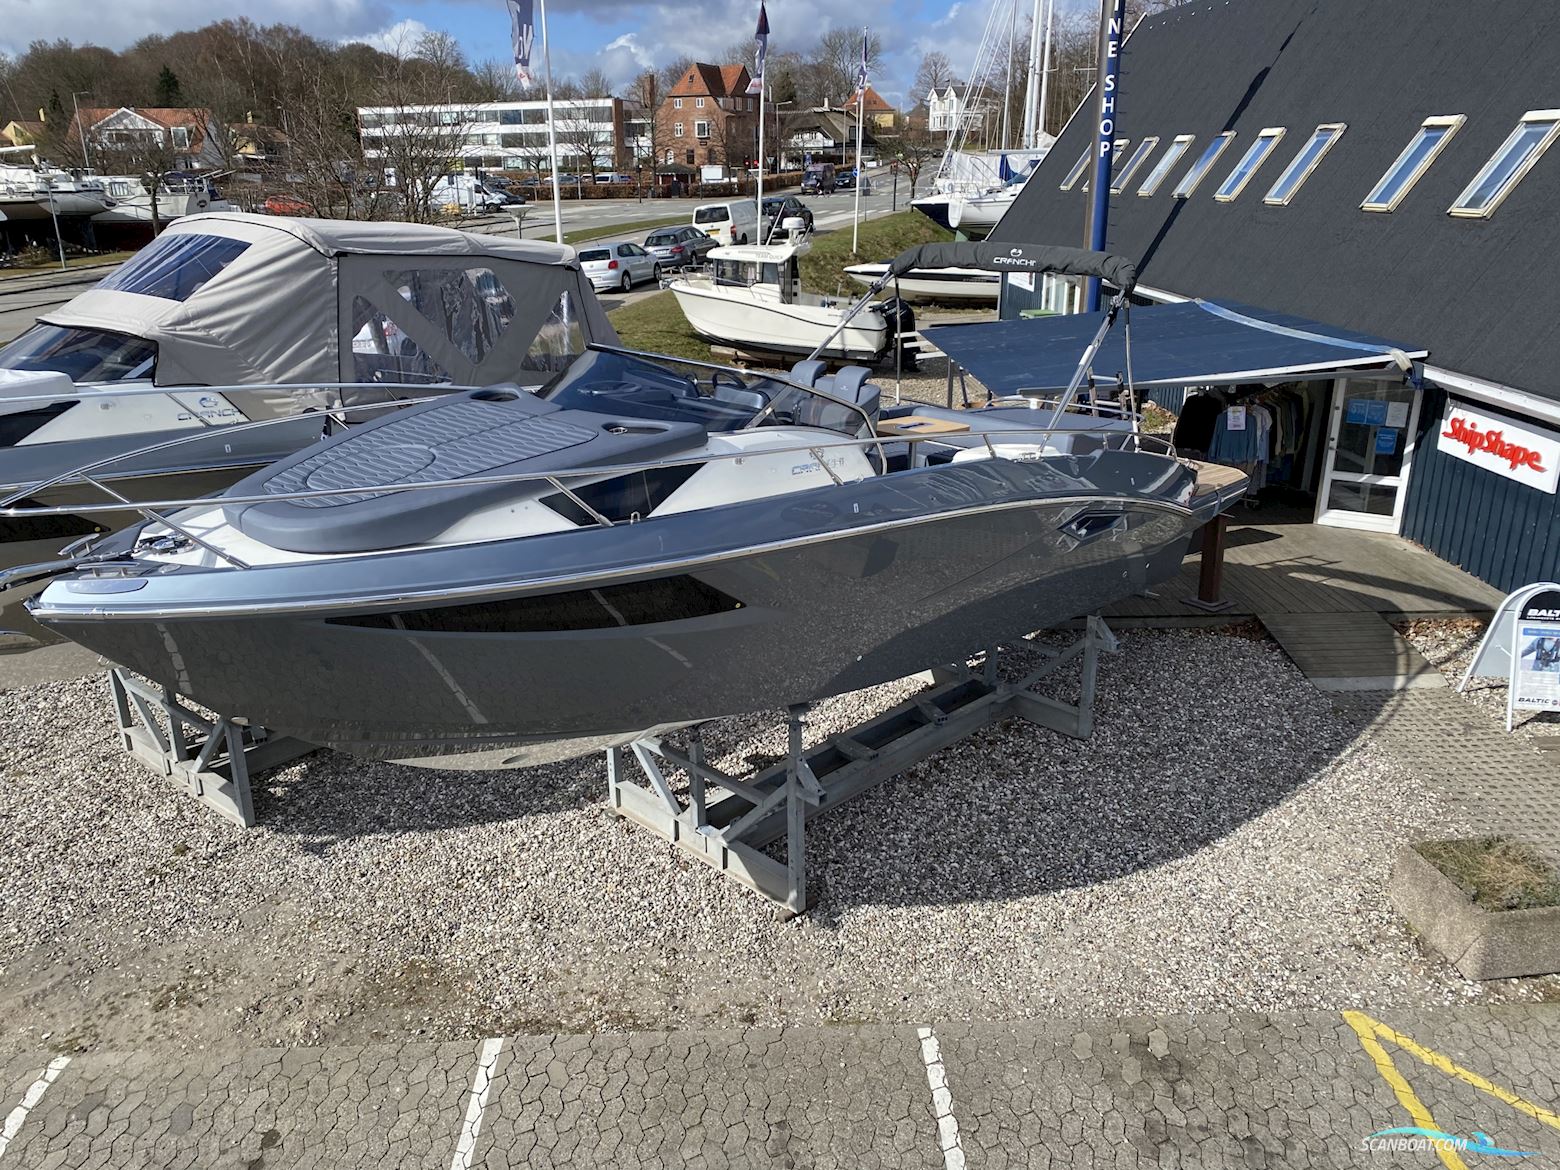 Cranchi E30 Endurance (2021) Motor boat 2021, with Volvo Penta engine, Denmark